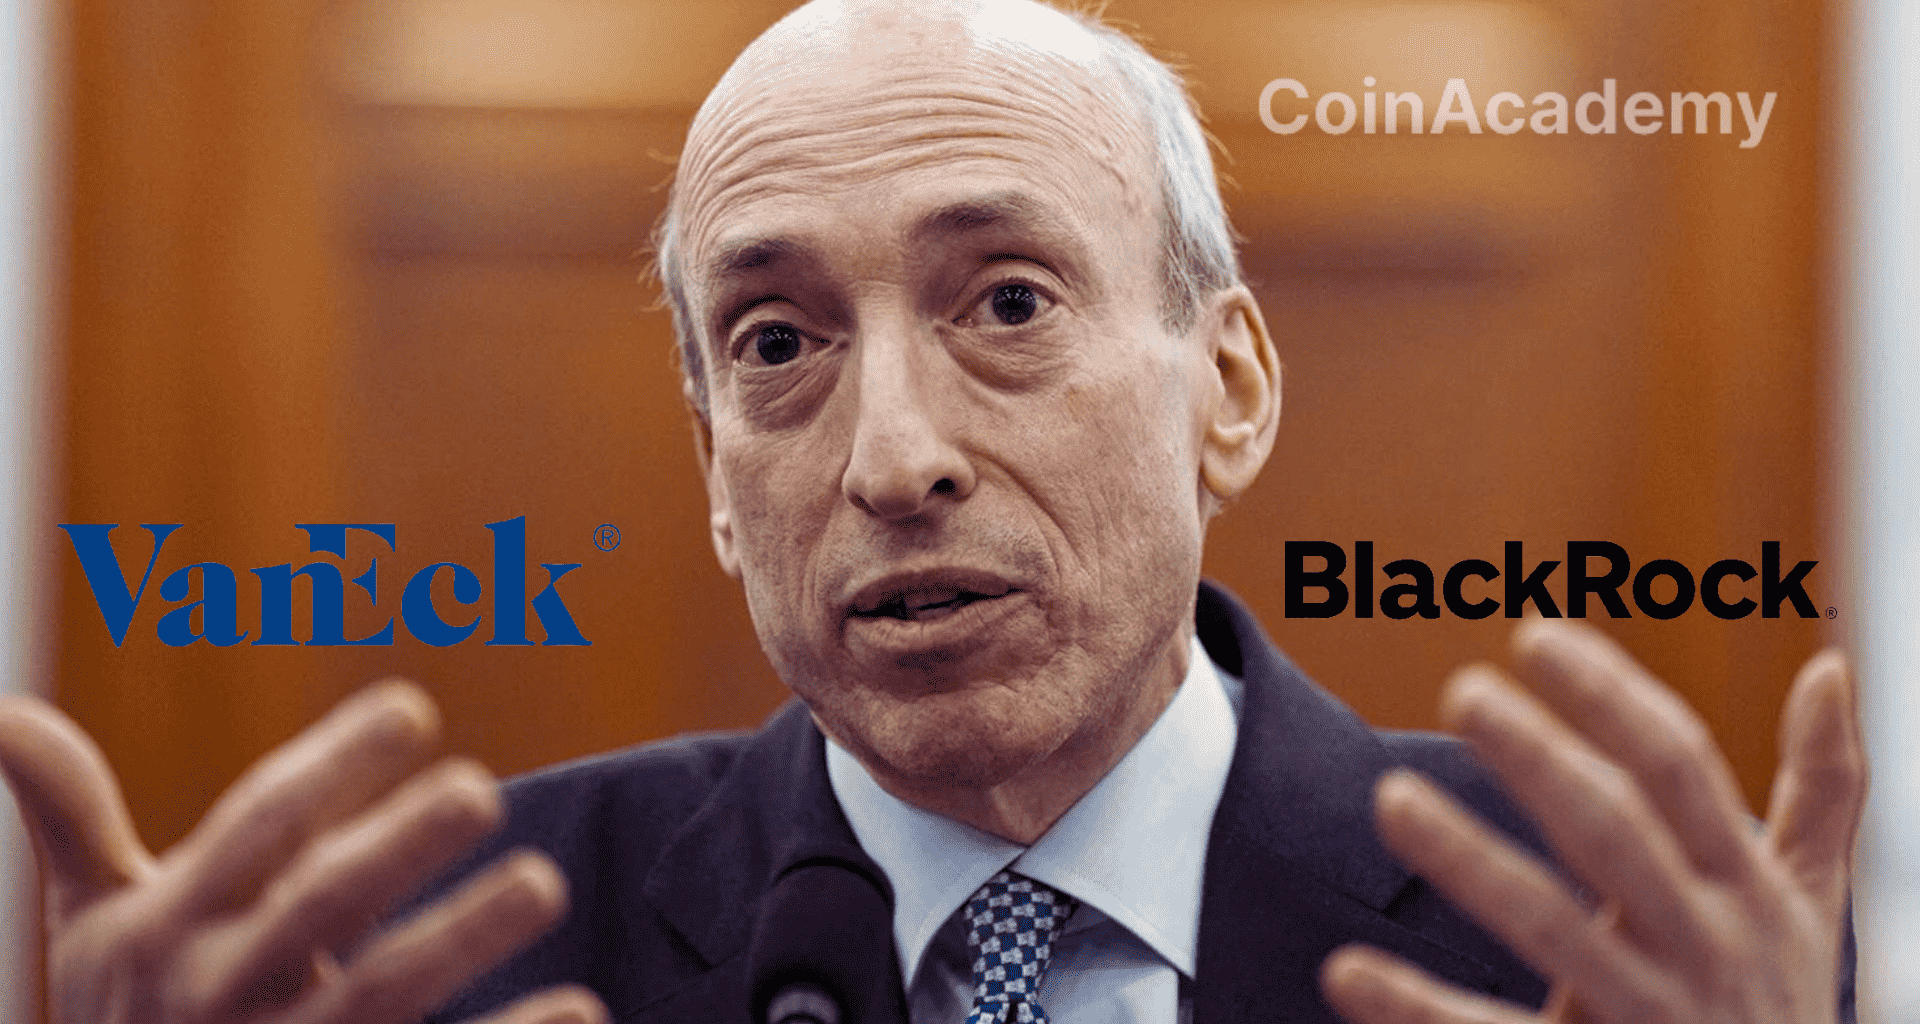 blackrock vaneck sec etf bitcoin